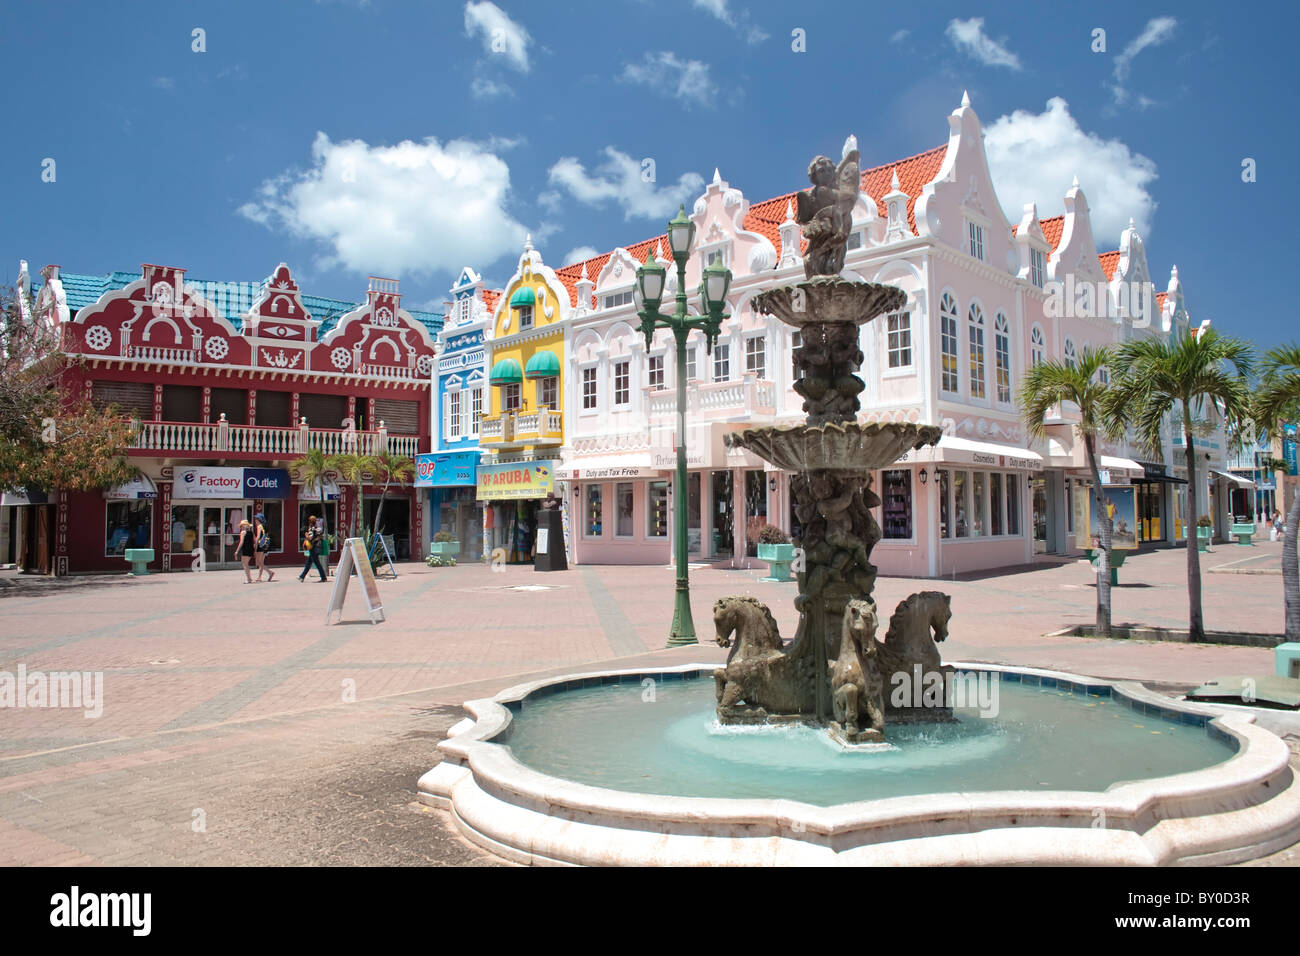 Brunnen auf dem Platz im freien Holland Aruba Mall Oranjestad Aruba Stockfoto